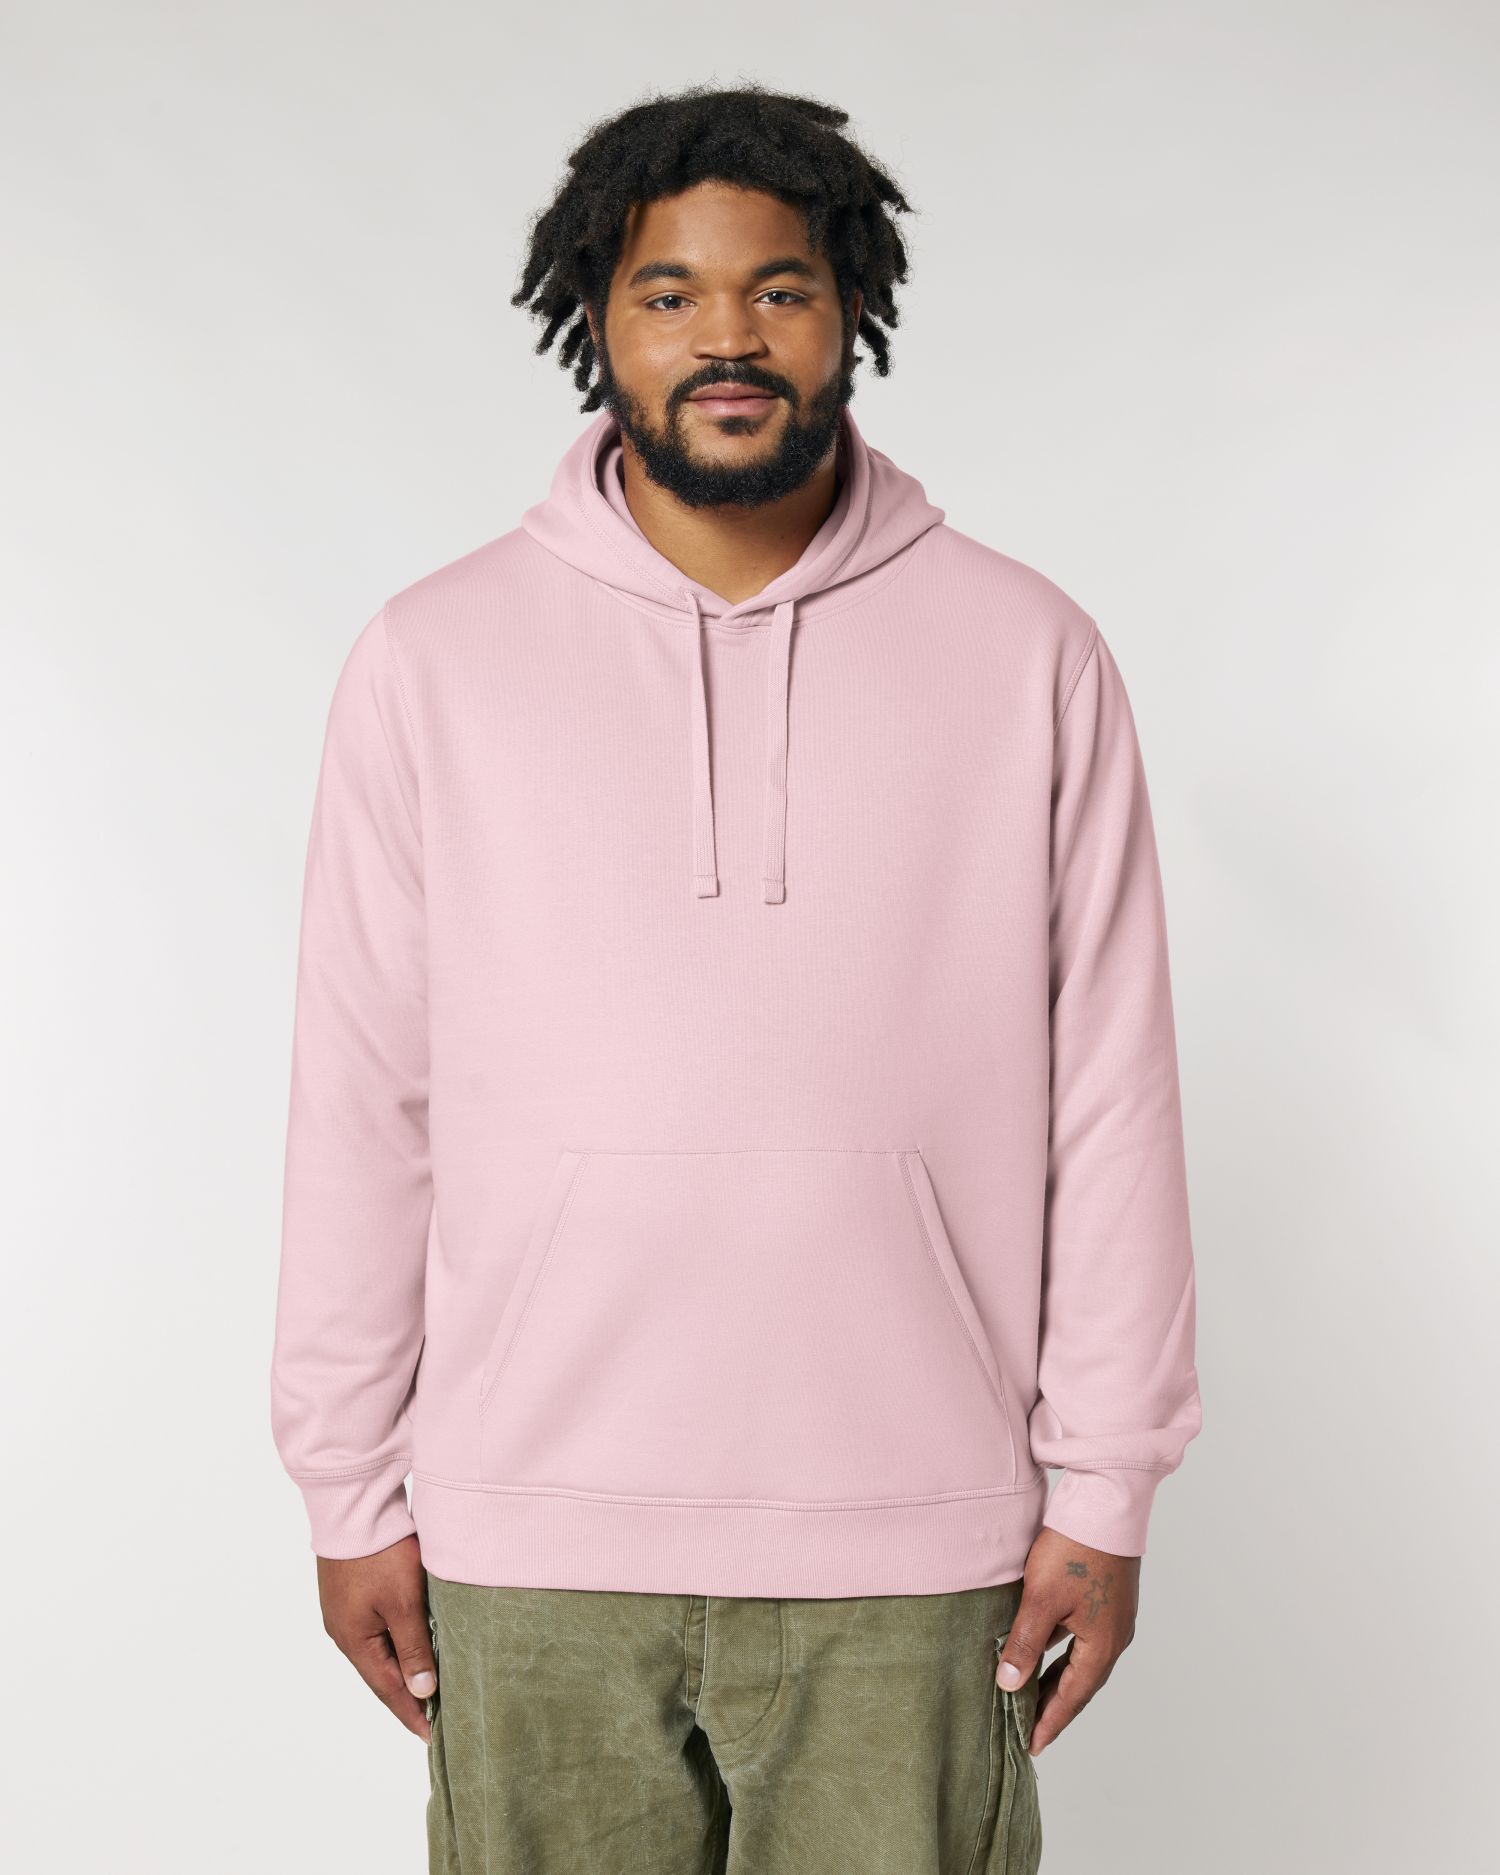 Hoodie sweatshirts Drummer 2.0 in Farbe Cotton Pink